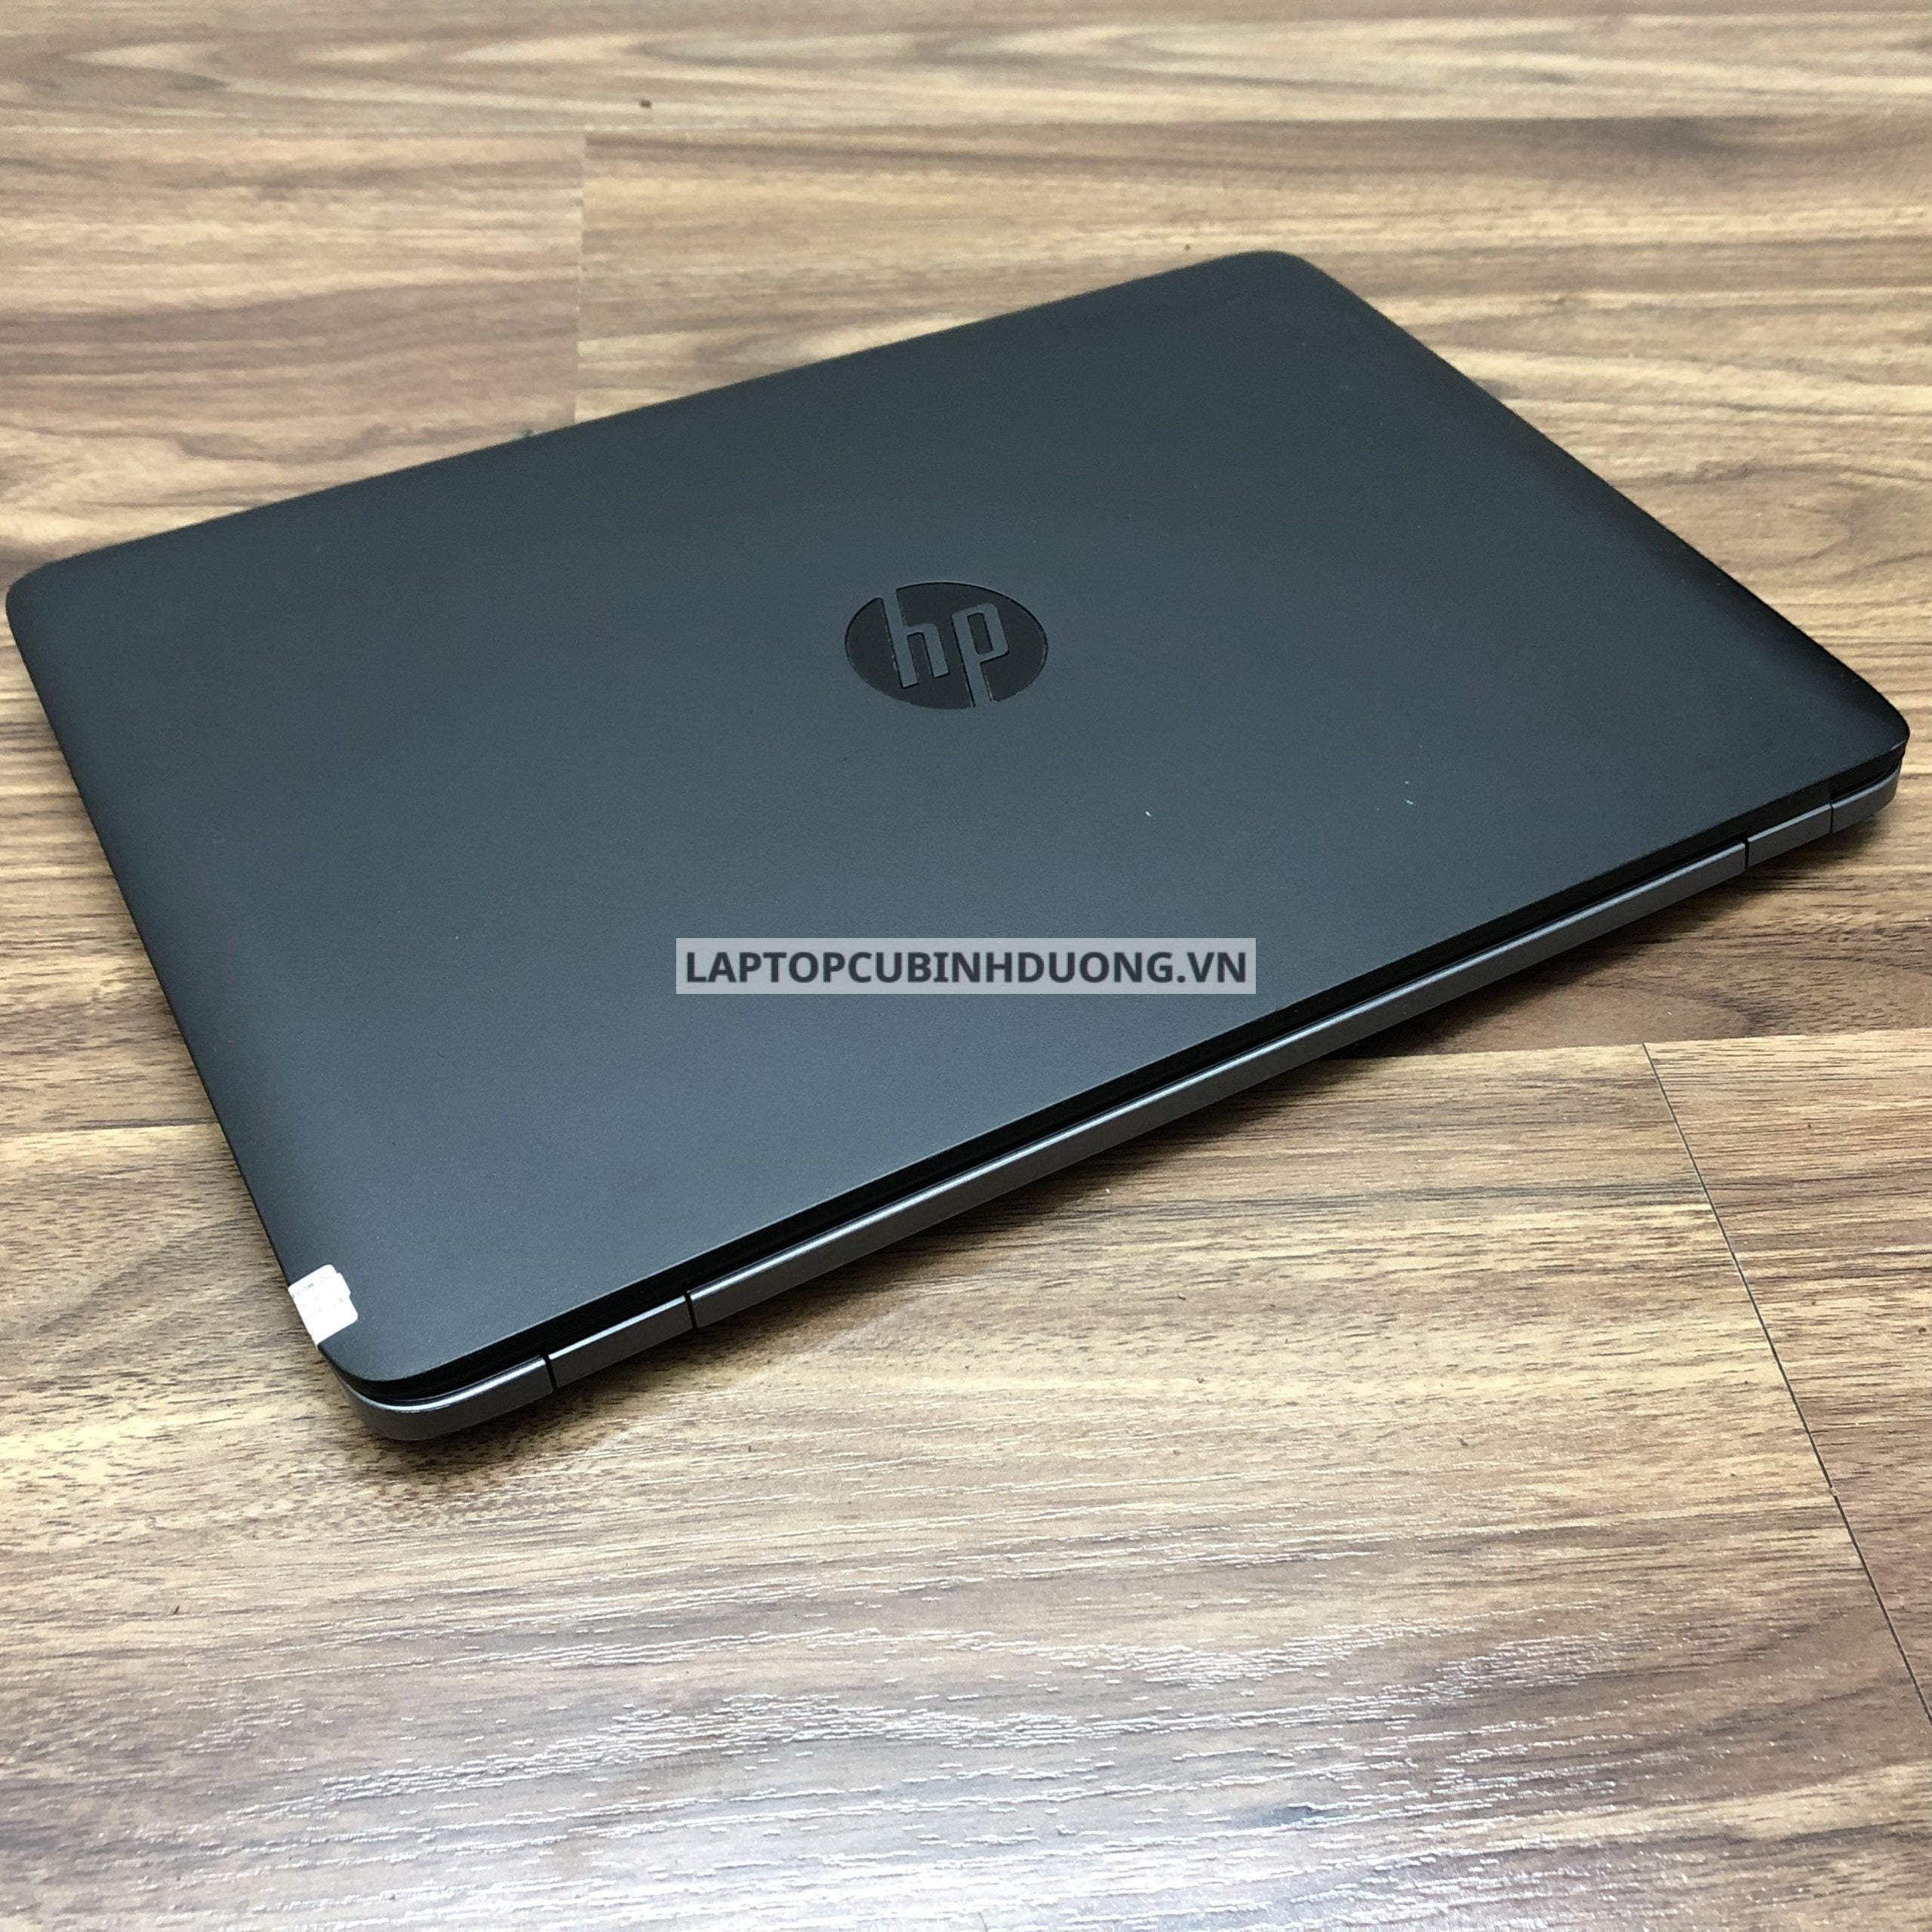 Laptop HP Elitebook 840 G2 Cũ - Laptop Cũ Bình Dương 40661